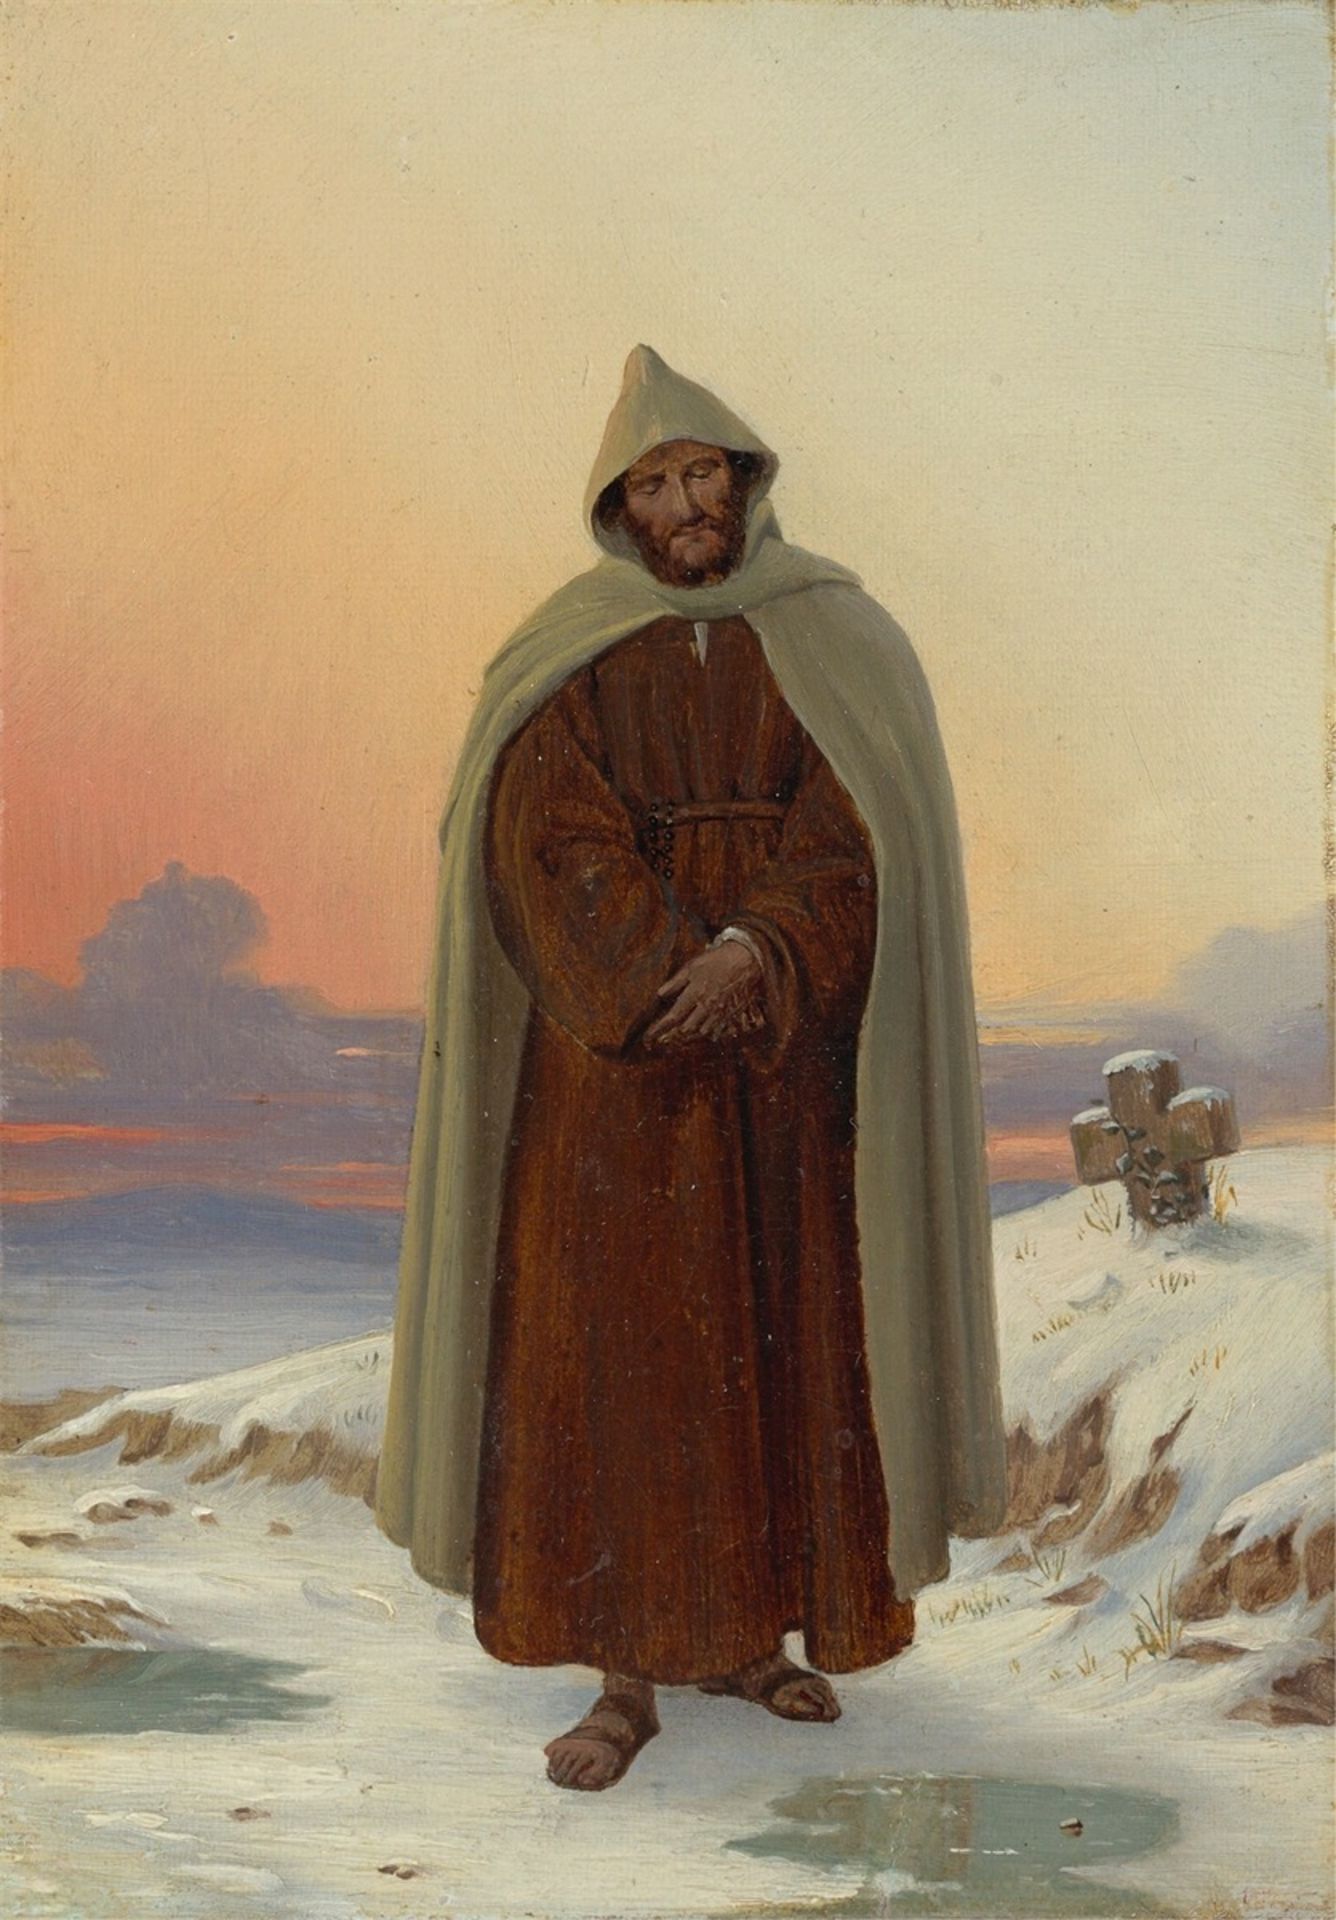 Düsseldorf, circa 1830/40. Monk going on a pilgrimage in the snow.